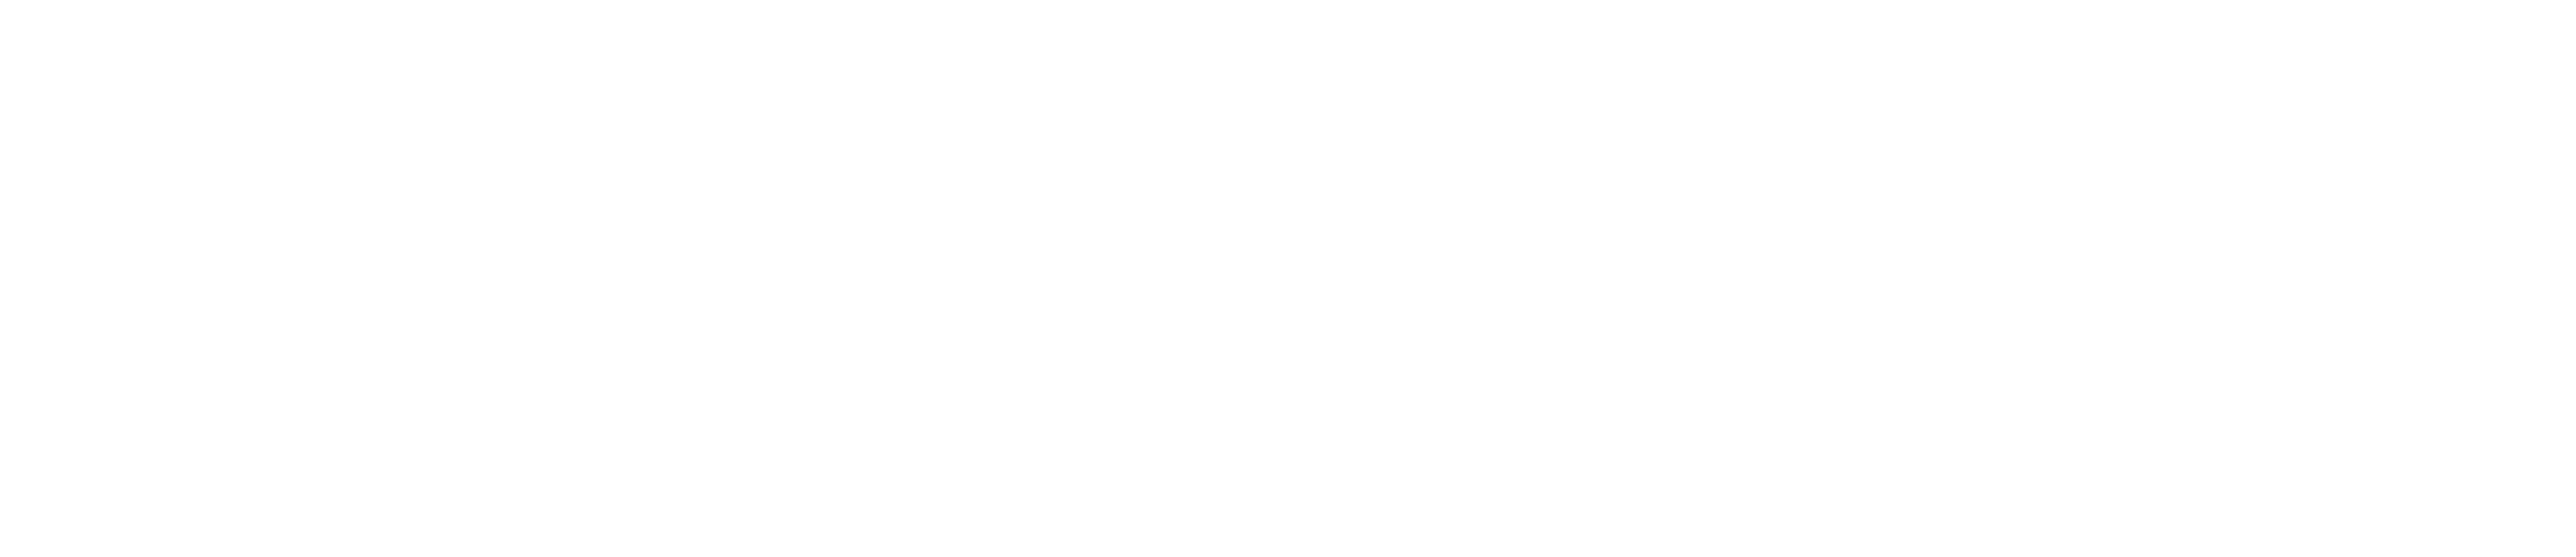 Coconut Software footer logo